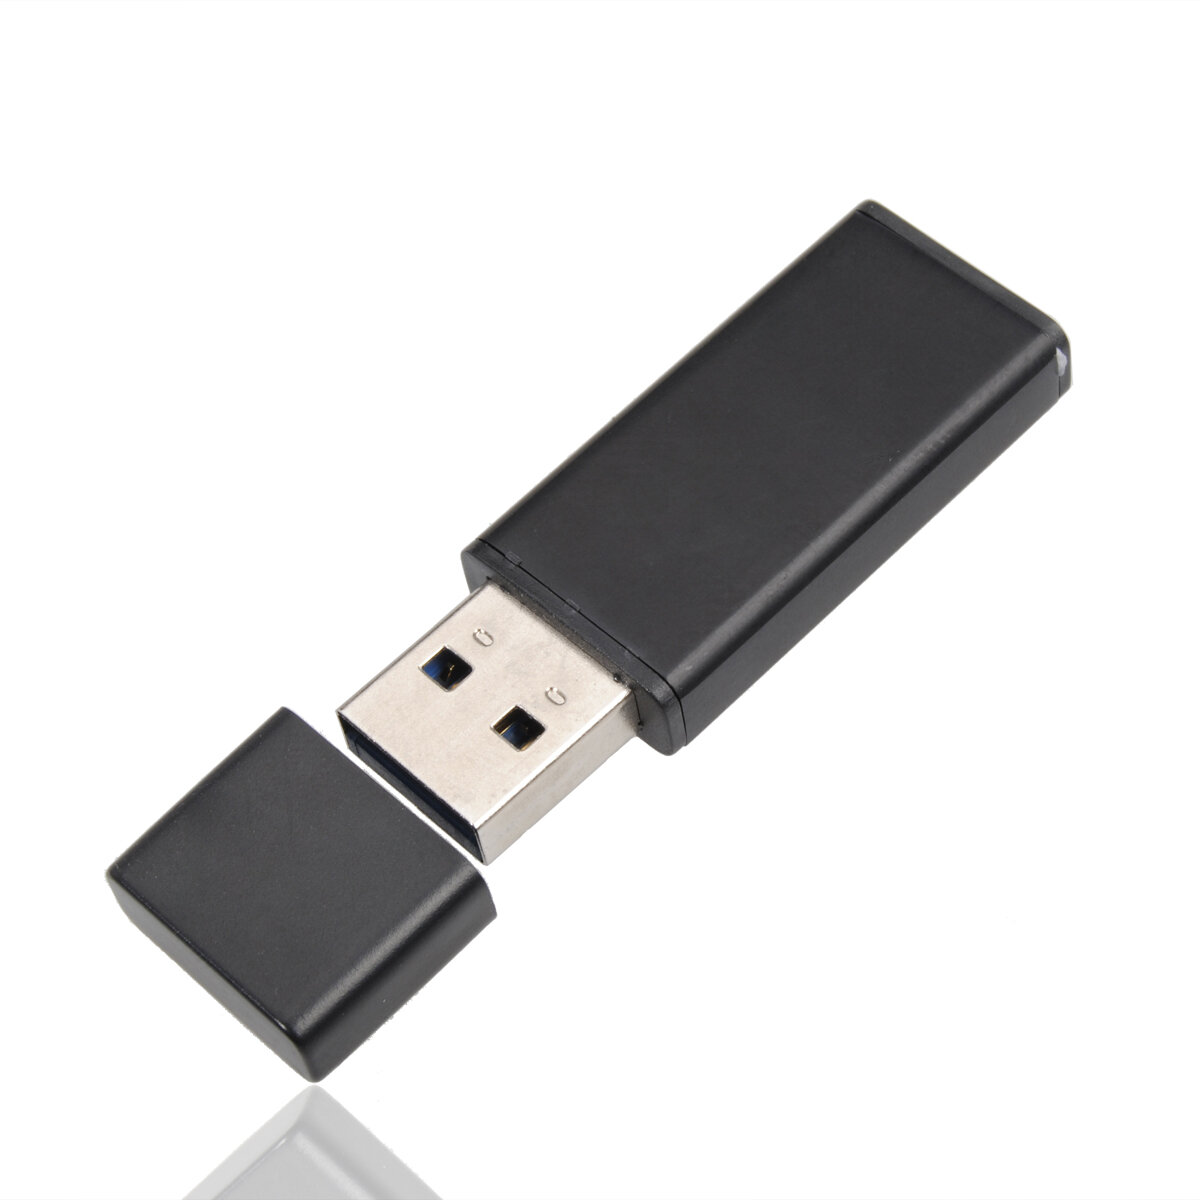 64G USB 3.0 Flash Drive Mini USB Disk Draagbare Thumb Drive Memory Stick voor Computer Laptop